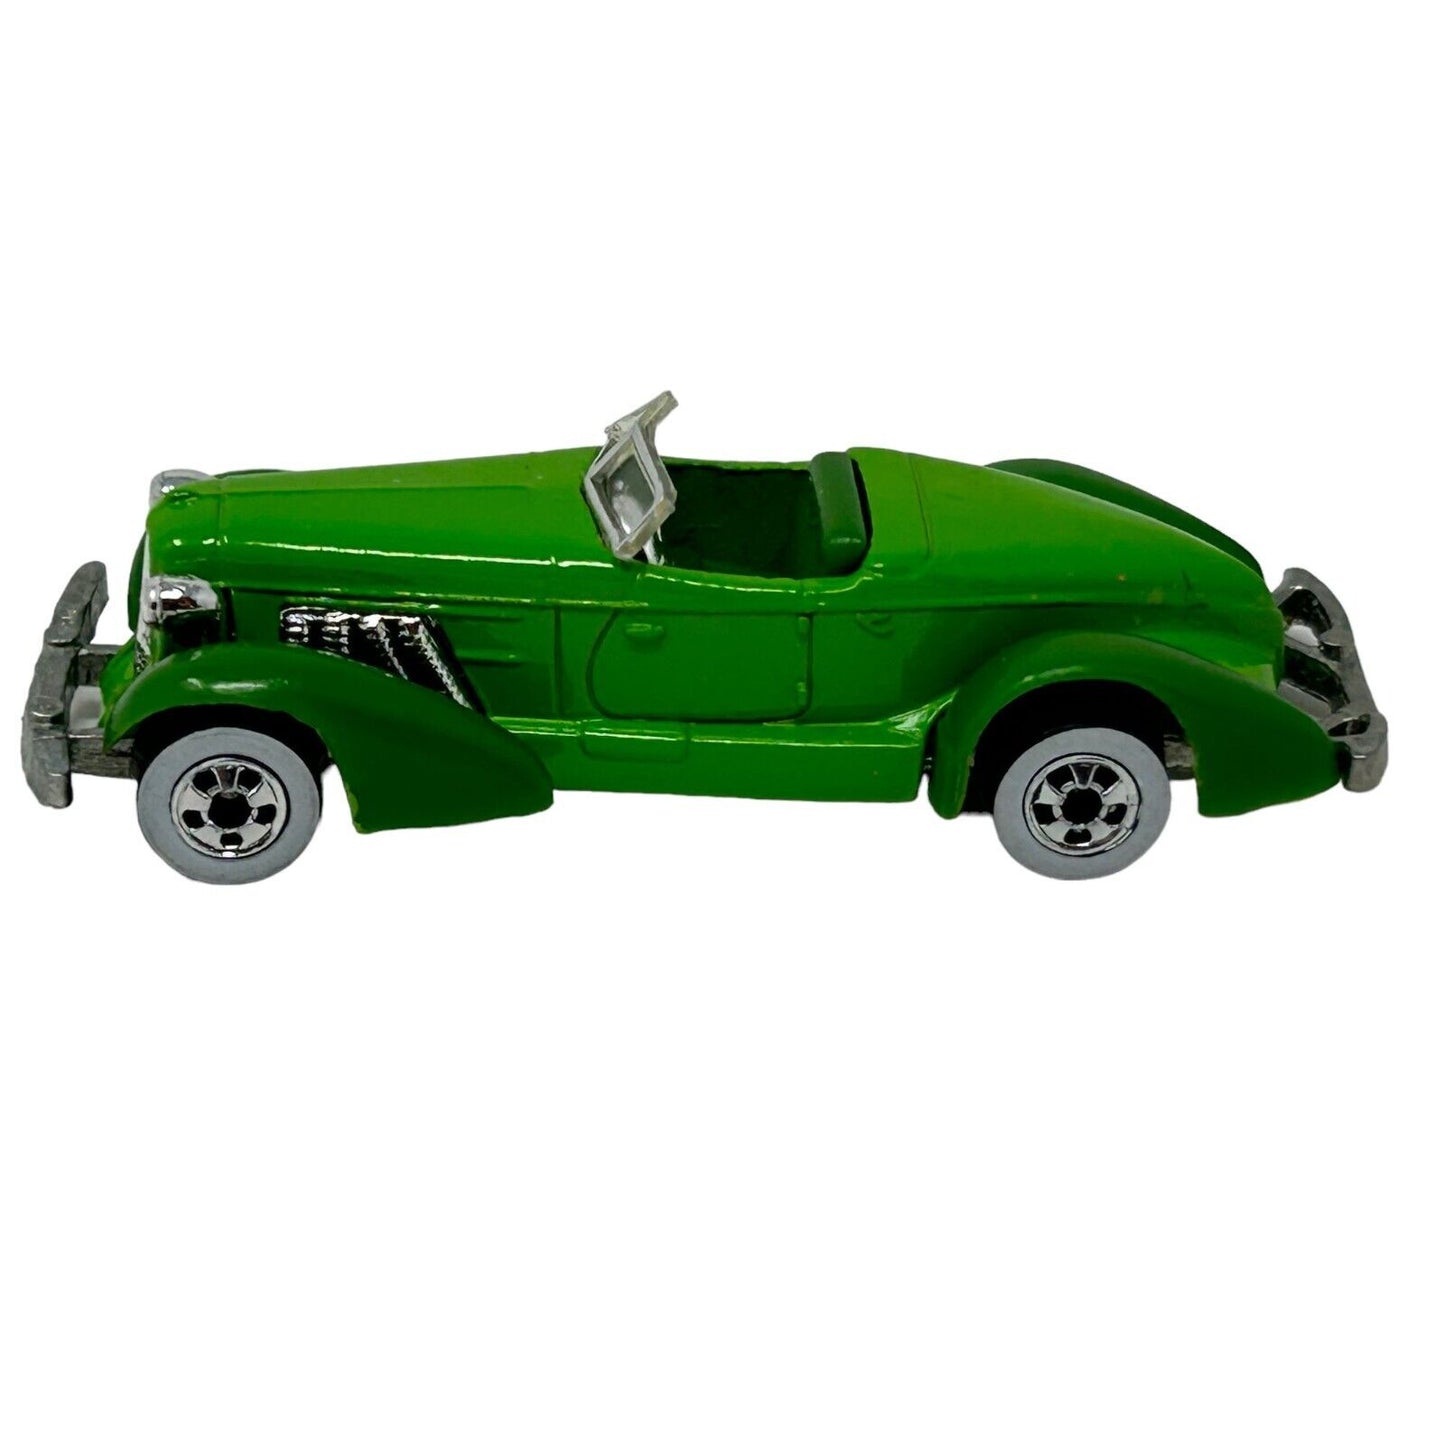 Auburn 852 Hot Wheels Collectible Diecast Car Convertible Green Vehicle Vintage